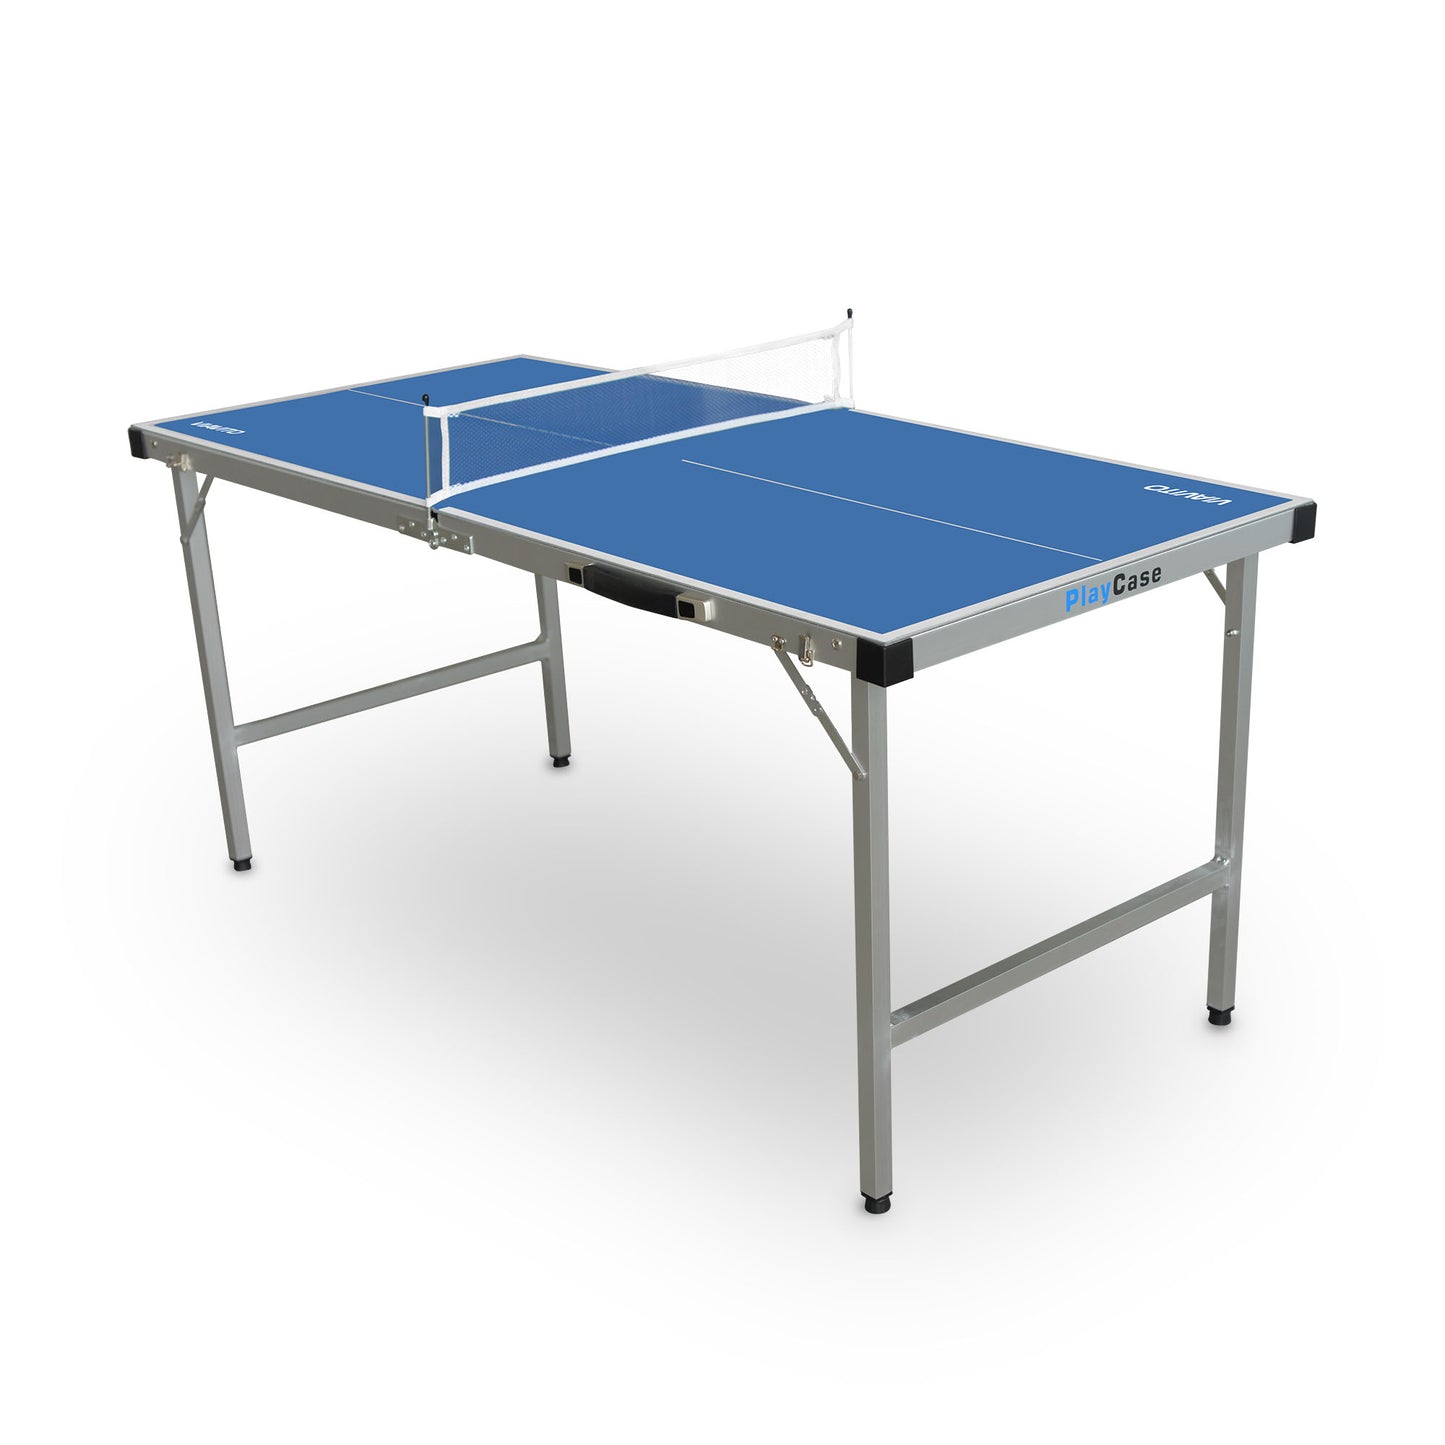 |Viavito PlayCase Table Tennis Table - Main - New|